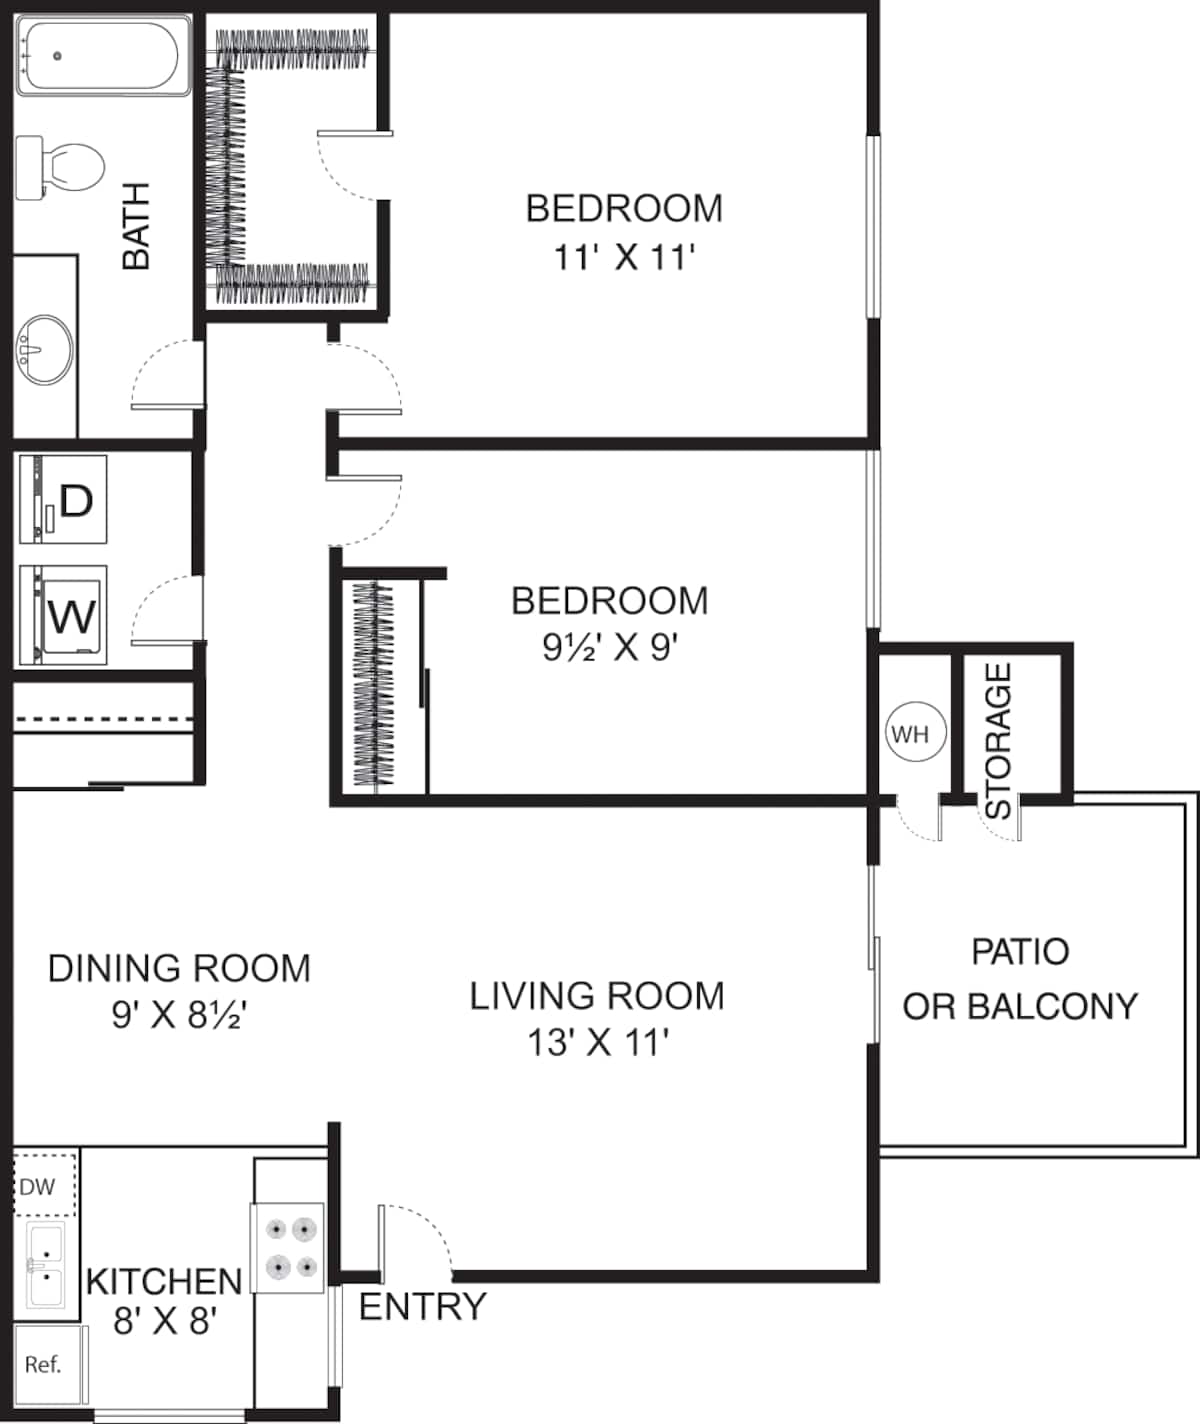 Floorplan diagram for Jade, showing 2 bedroom